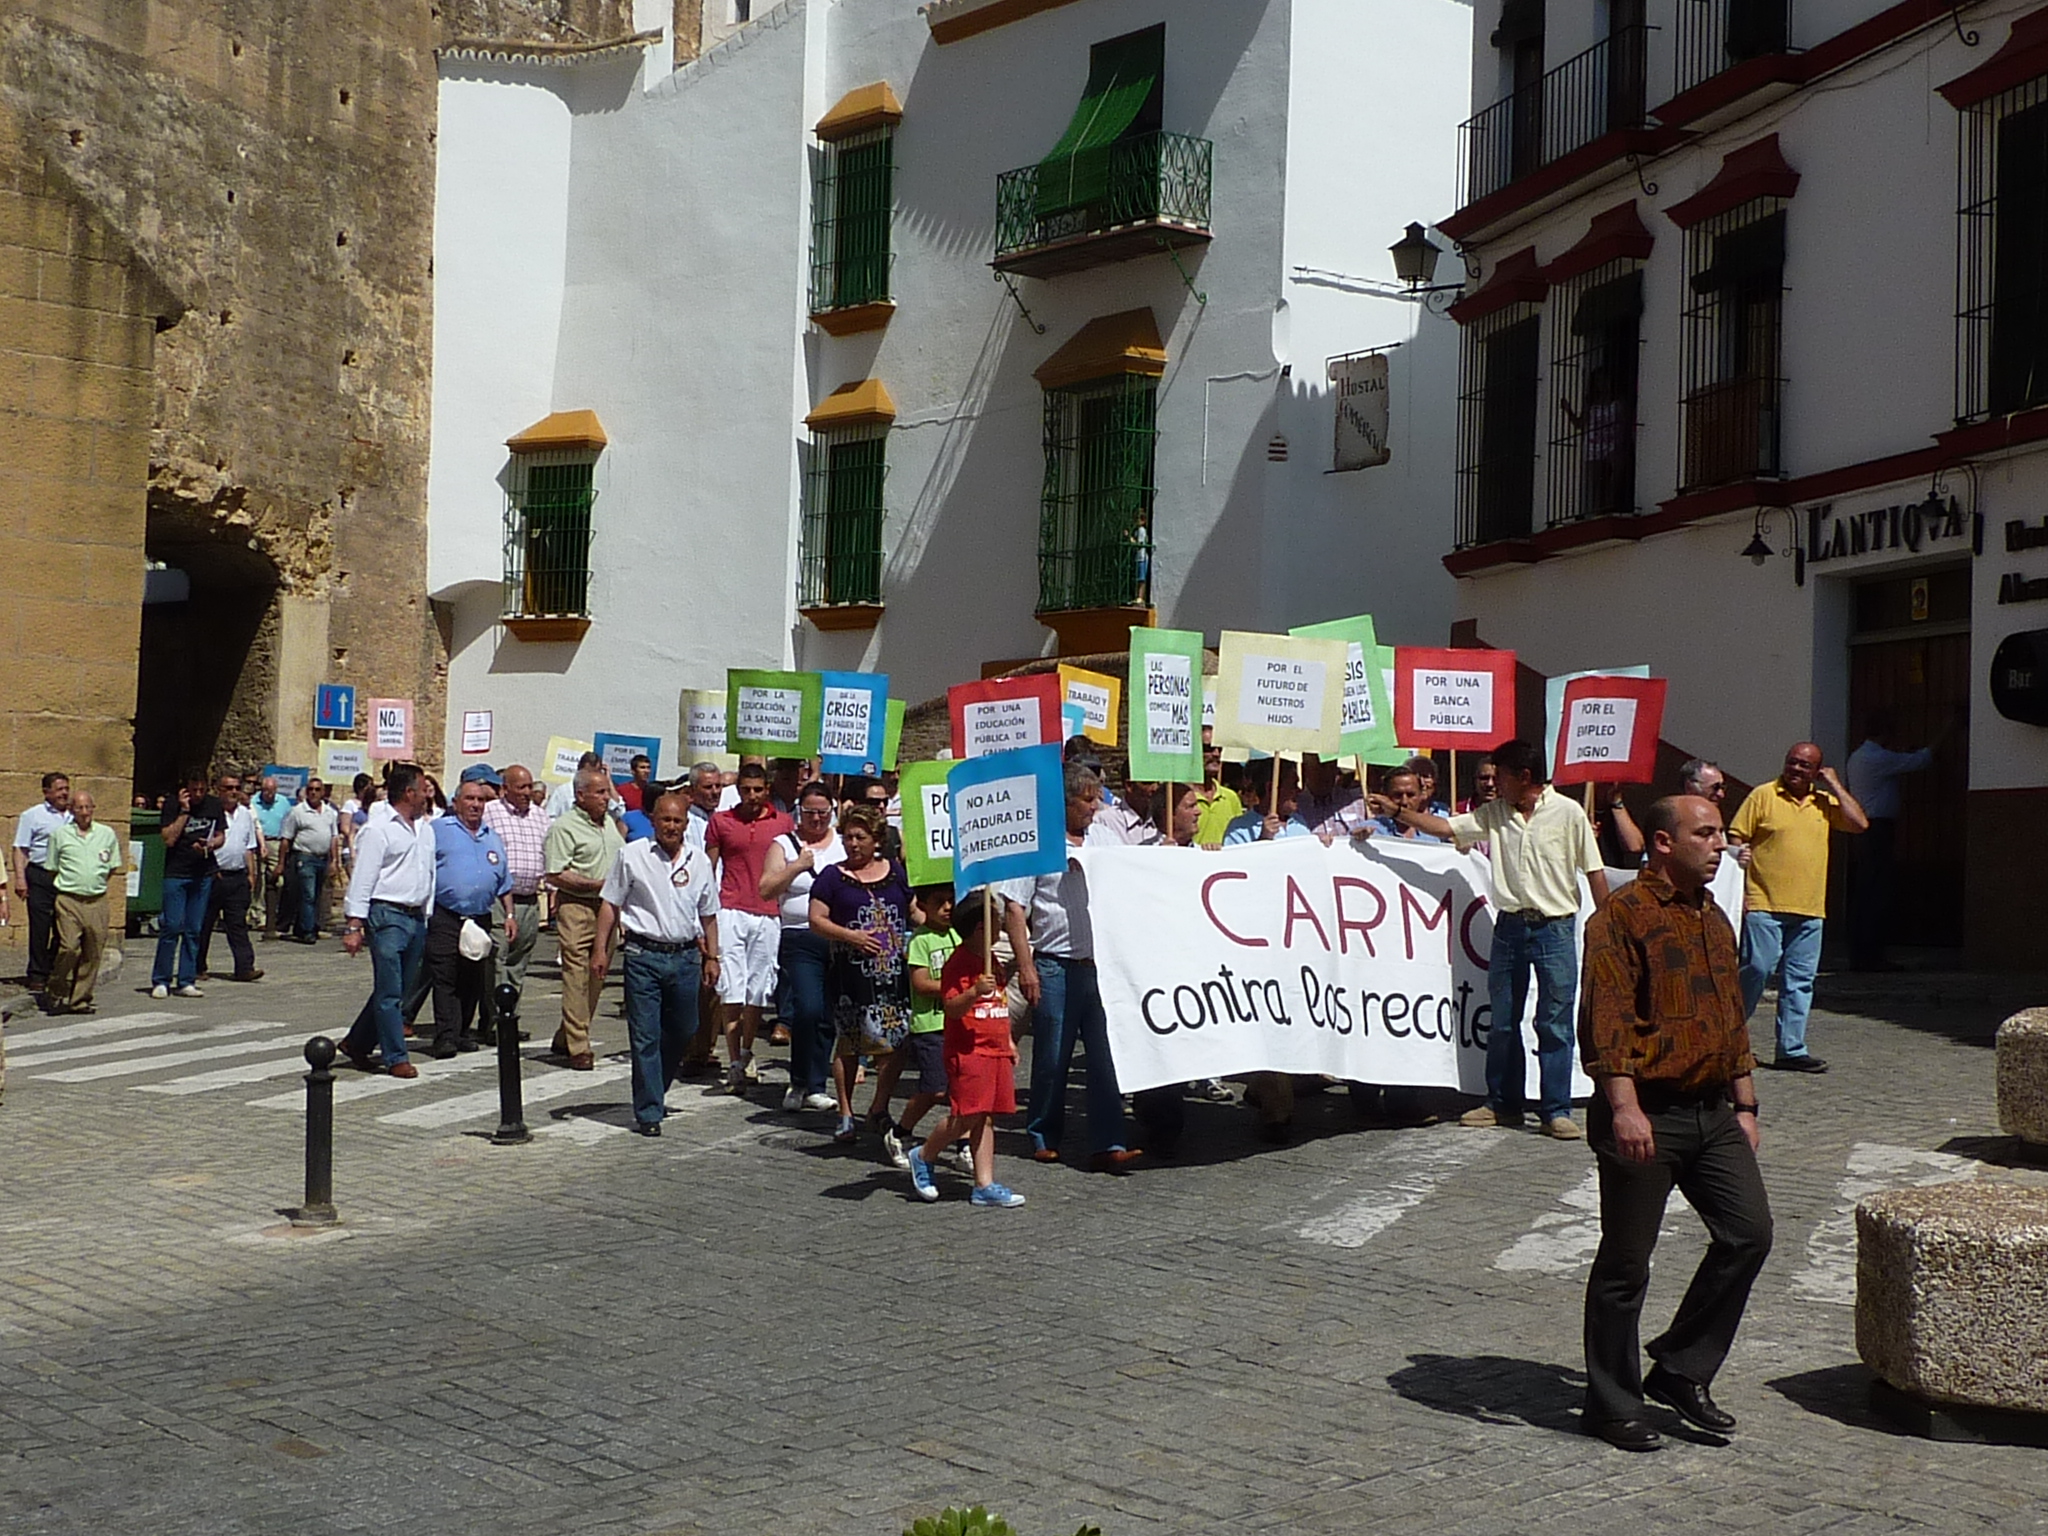 Worker's demonstration in Carmona, Spain